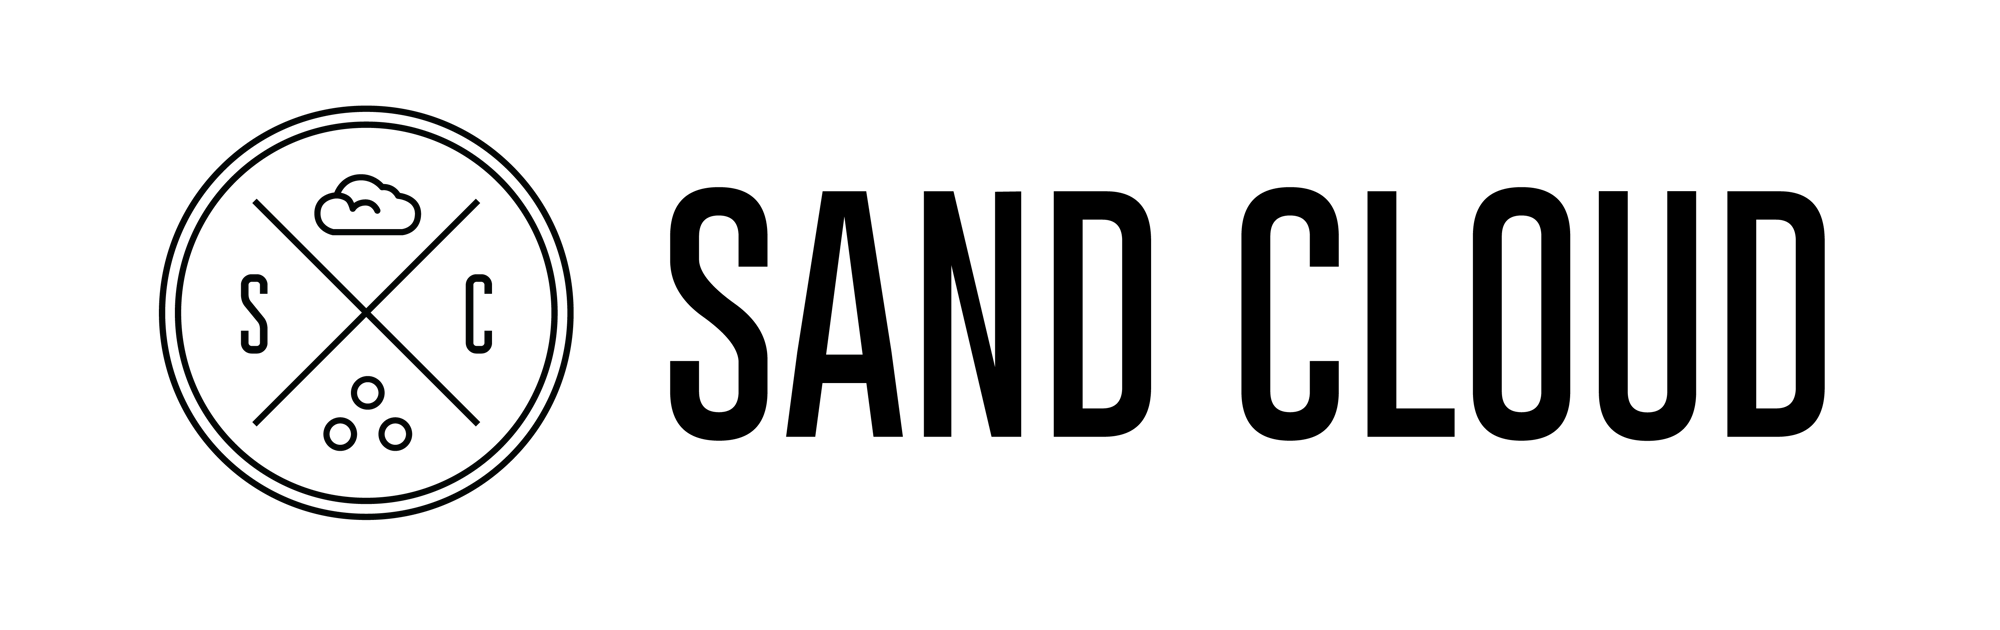 sand-cloud-logo-with-text_5374x_6ad75c9d-6017-4760-a671-44df7dba223b